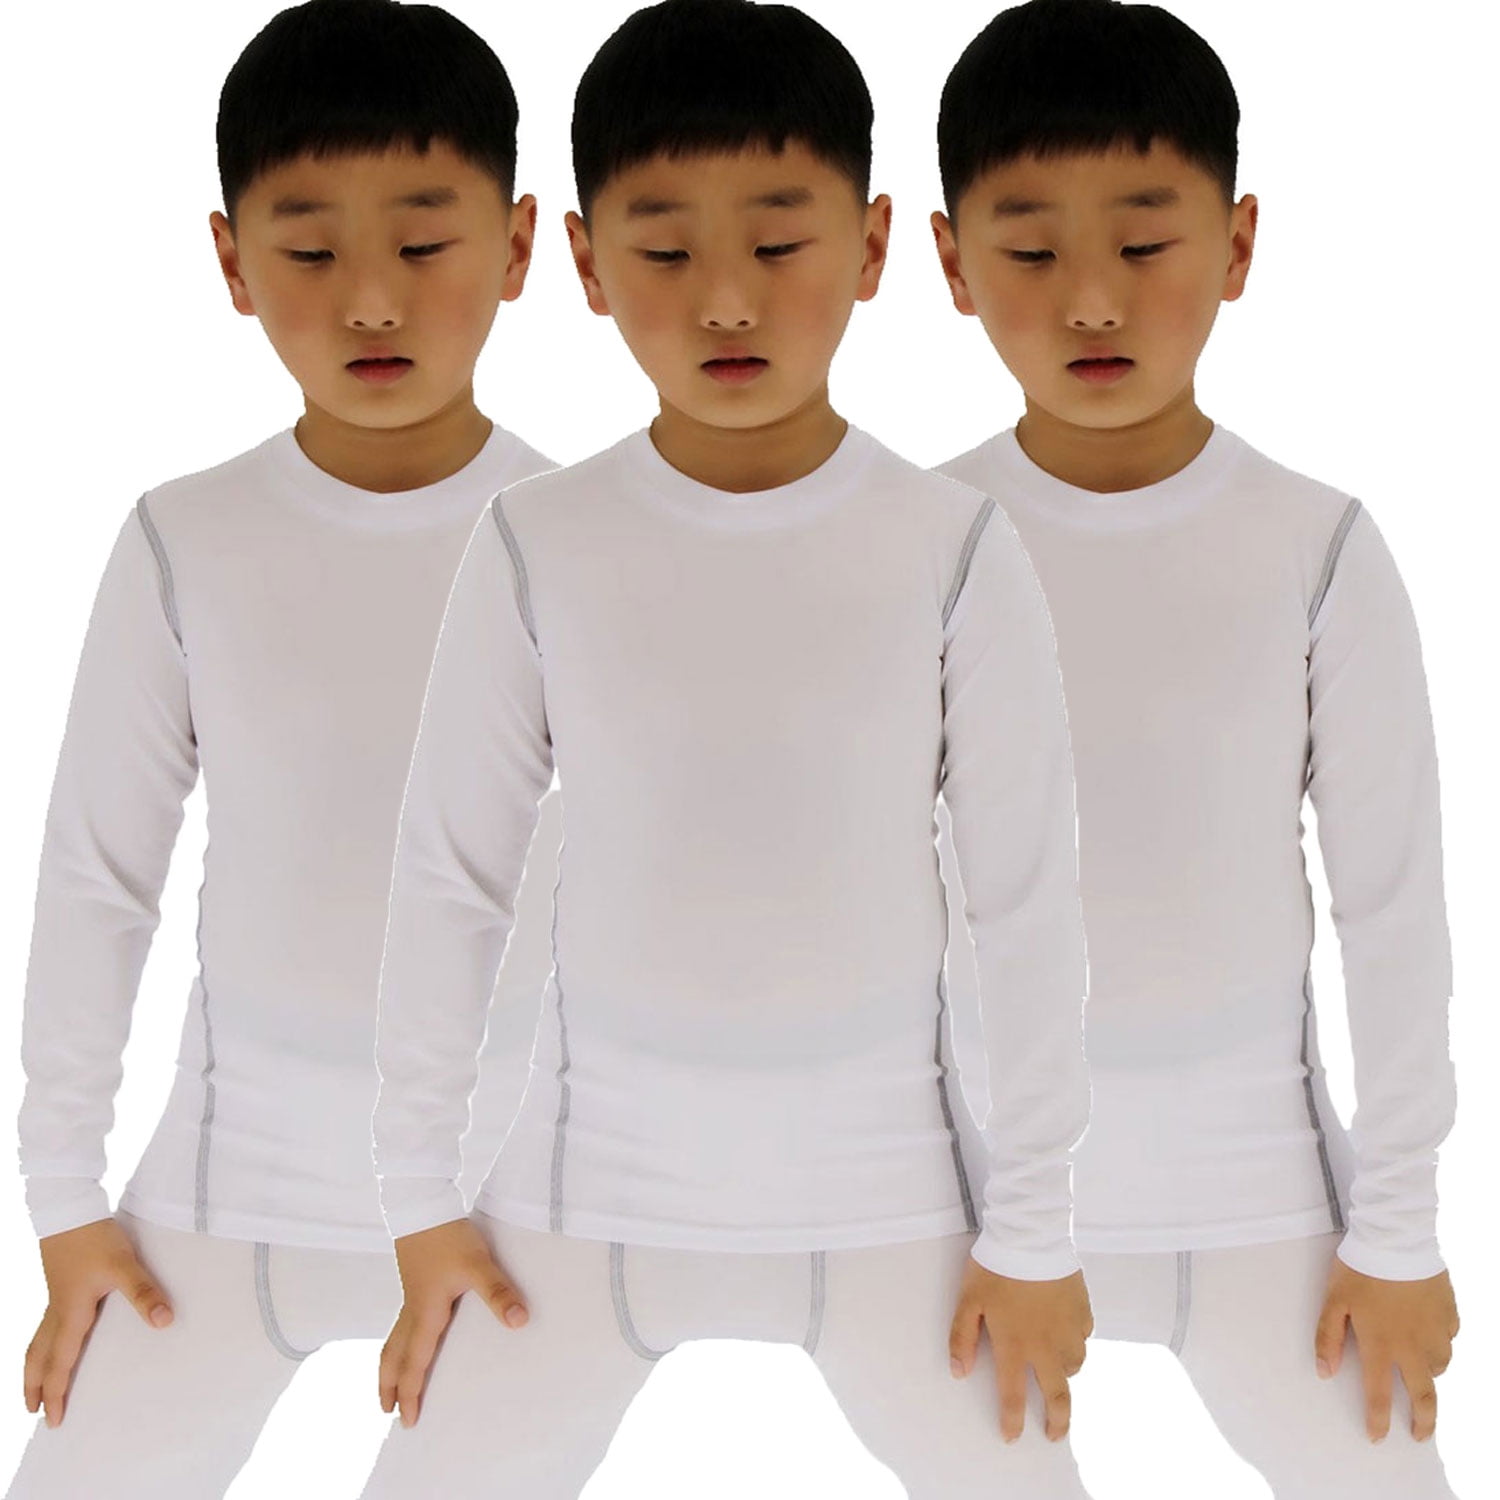  LANBAOSI Boys Girls Long Sleeve Compression Shirts